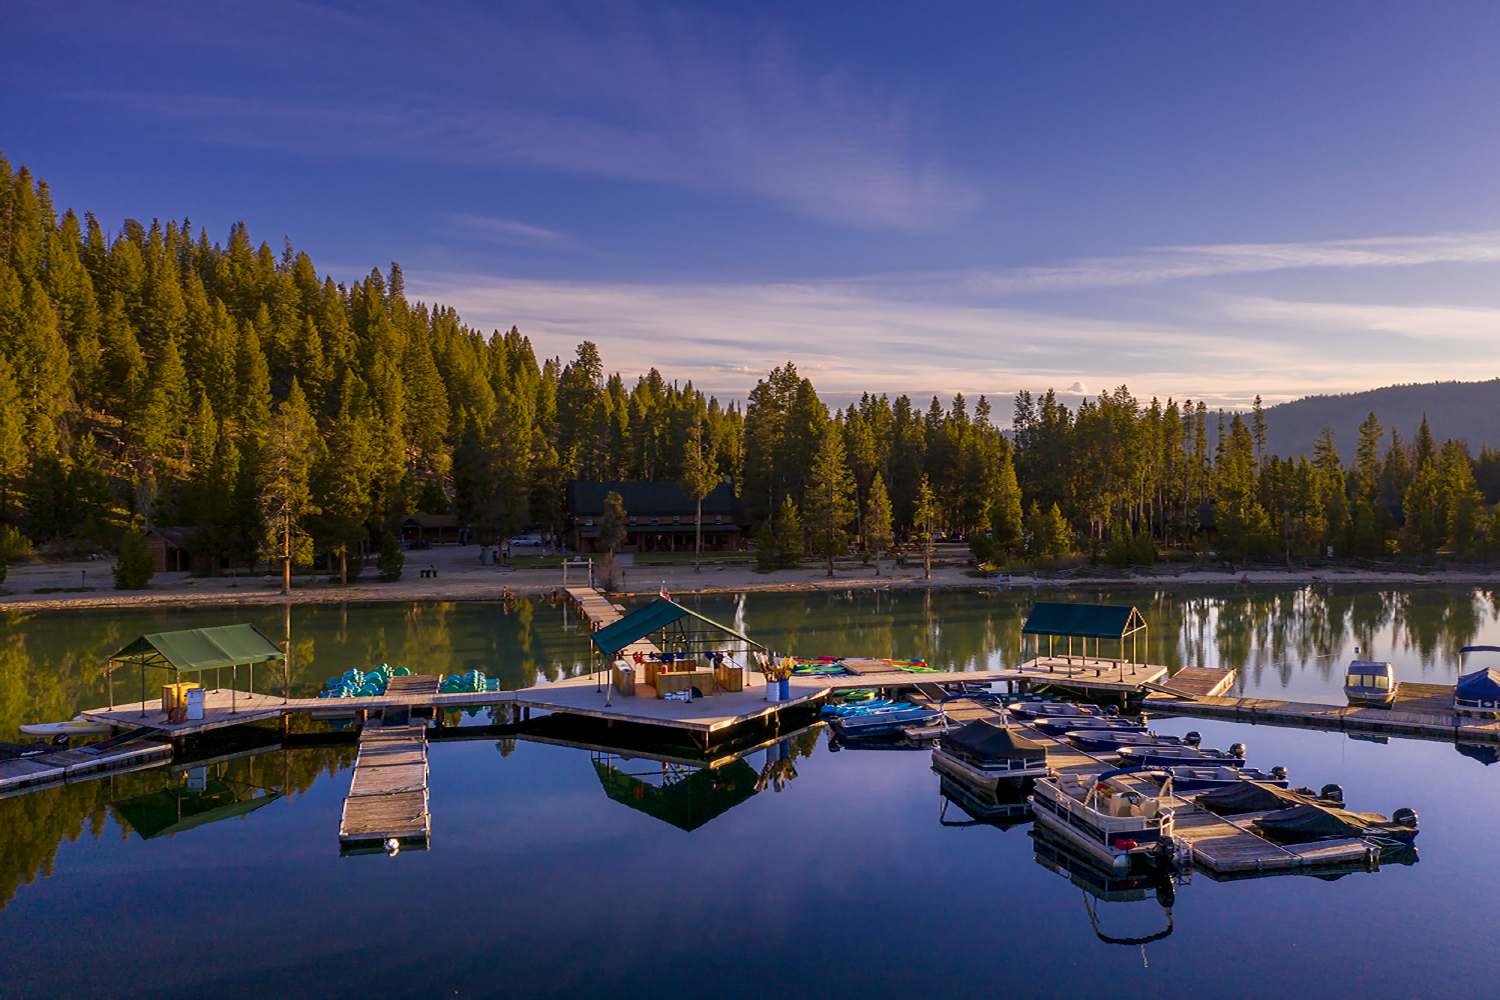 Boat dock on lake